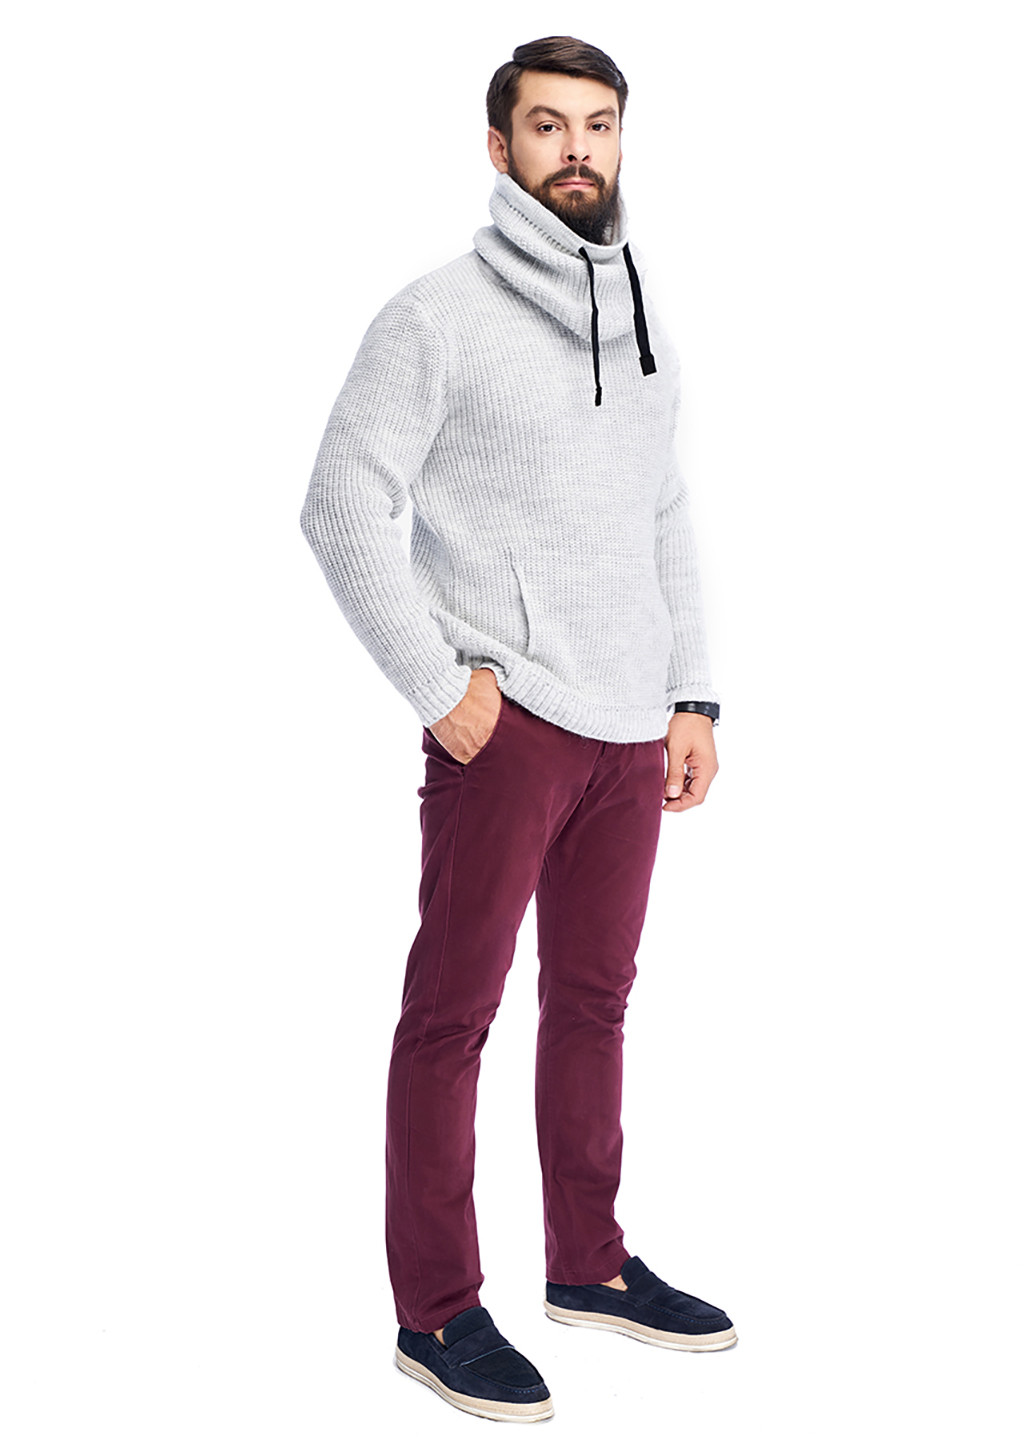 Светло-серый зимний свитер SVTR